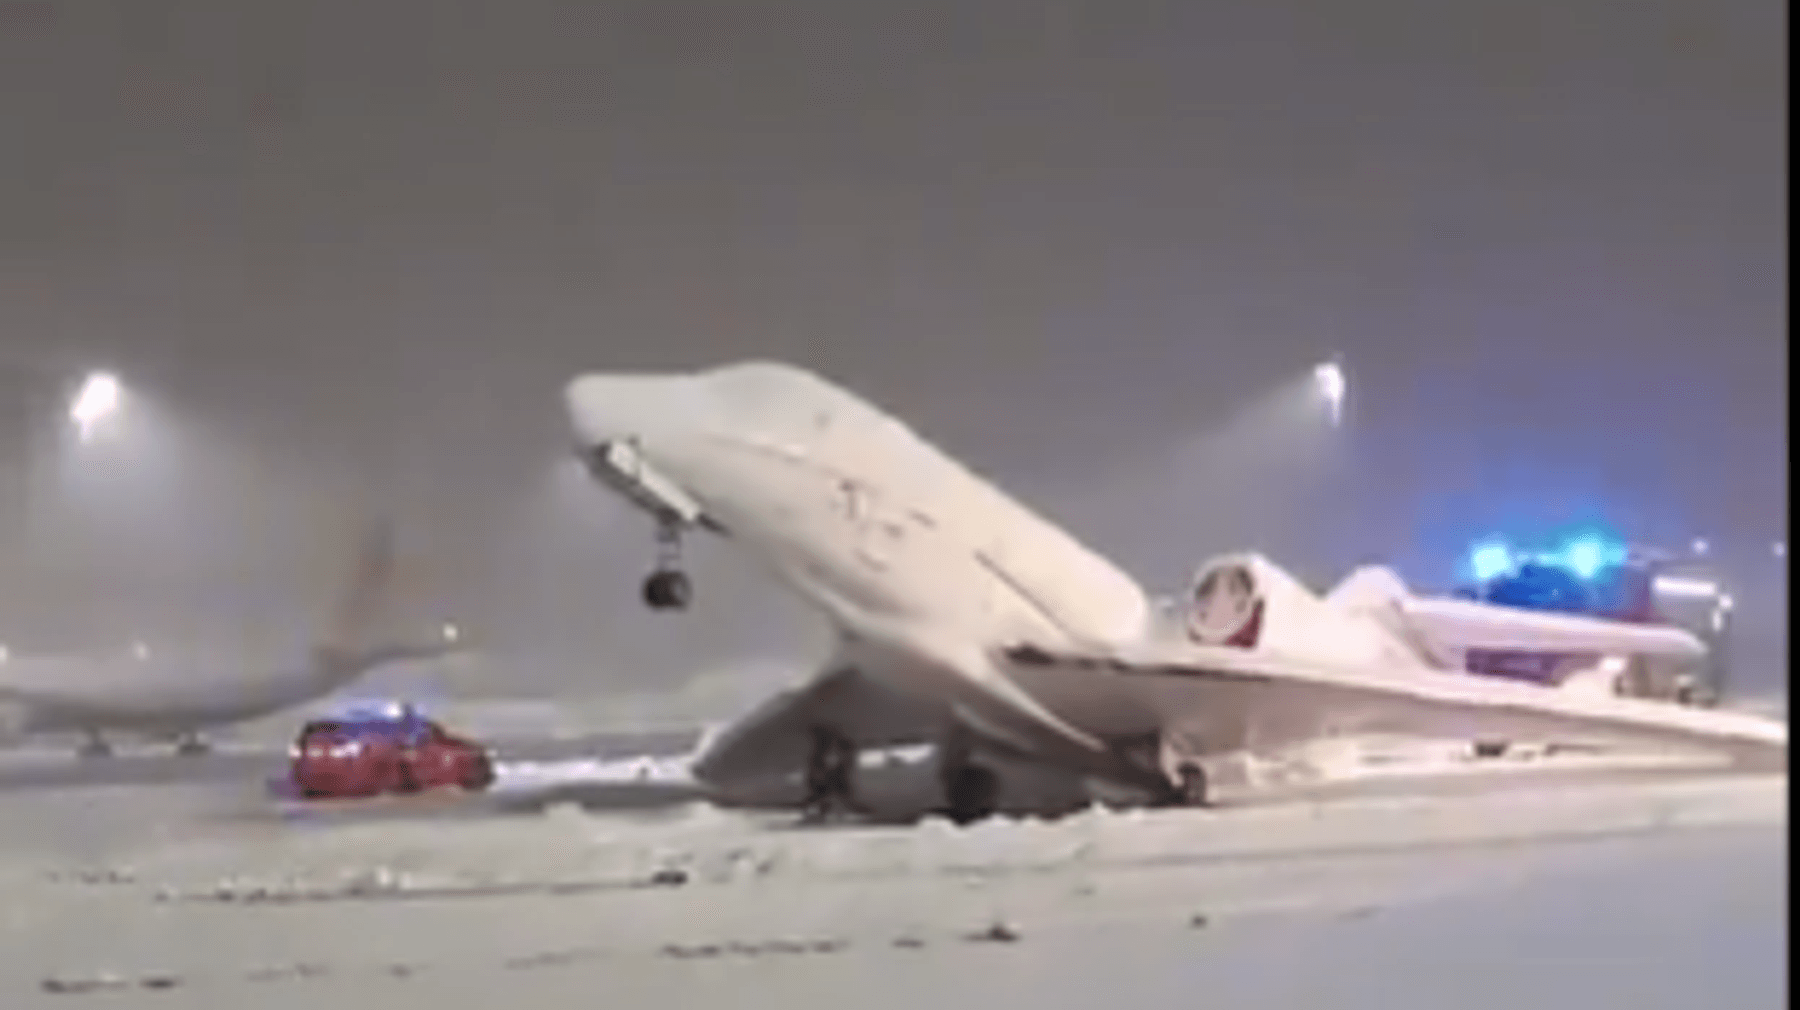 Snow shock in Munich: Luxury jet falls victim to winter – that’s behind the bizarre scene